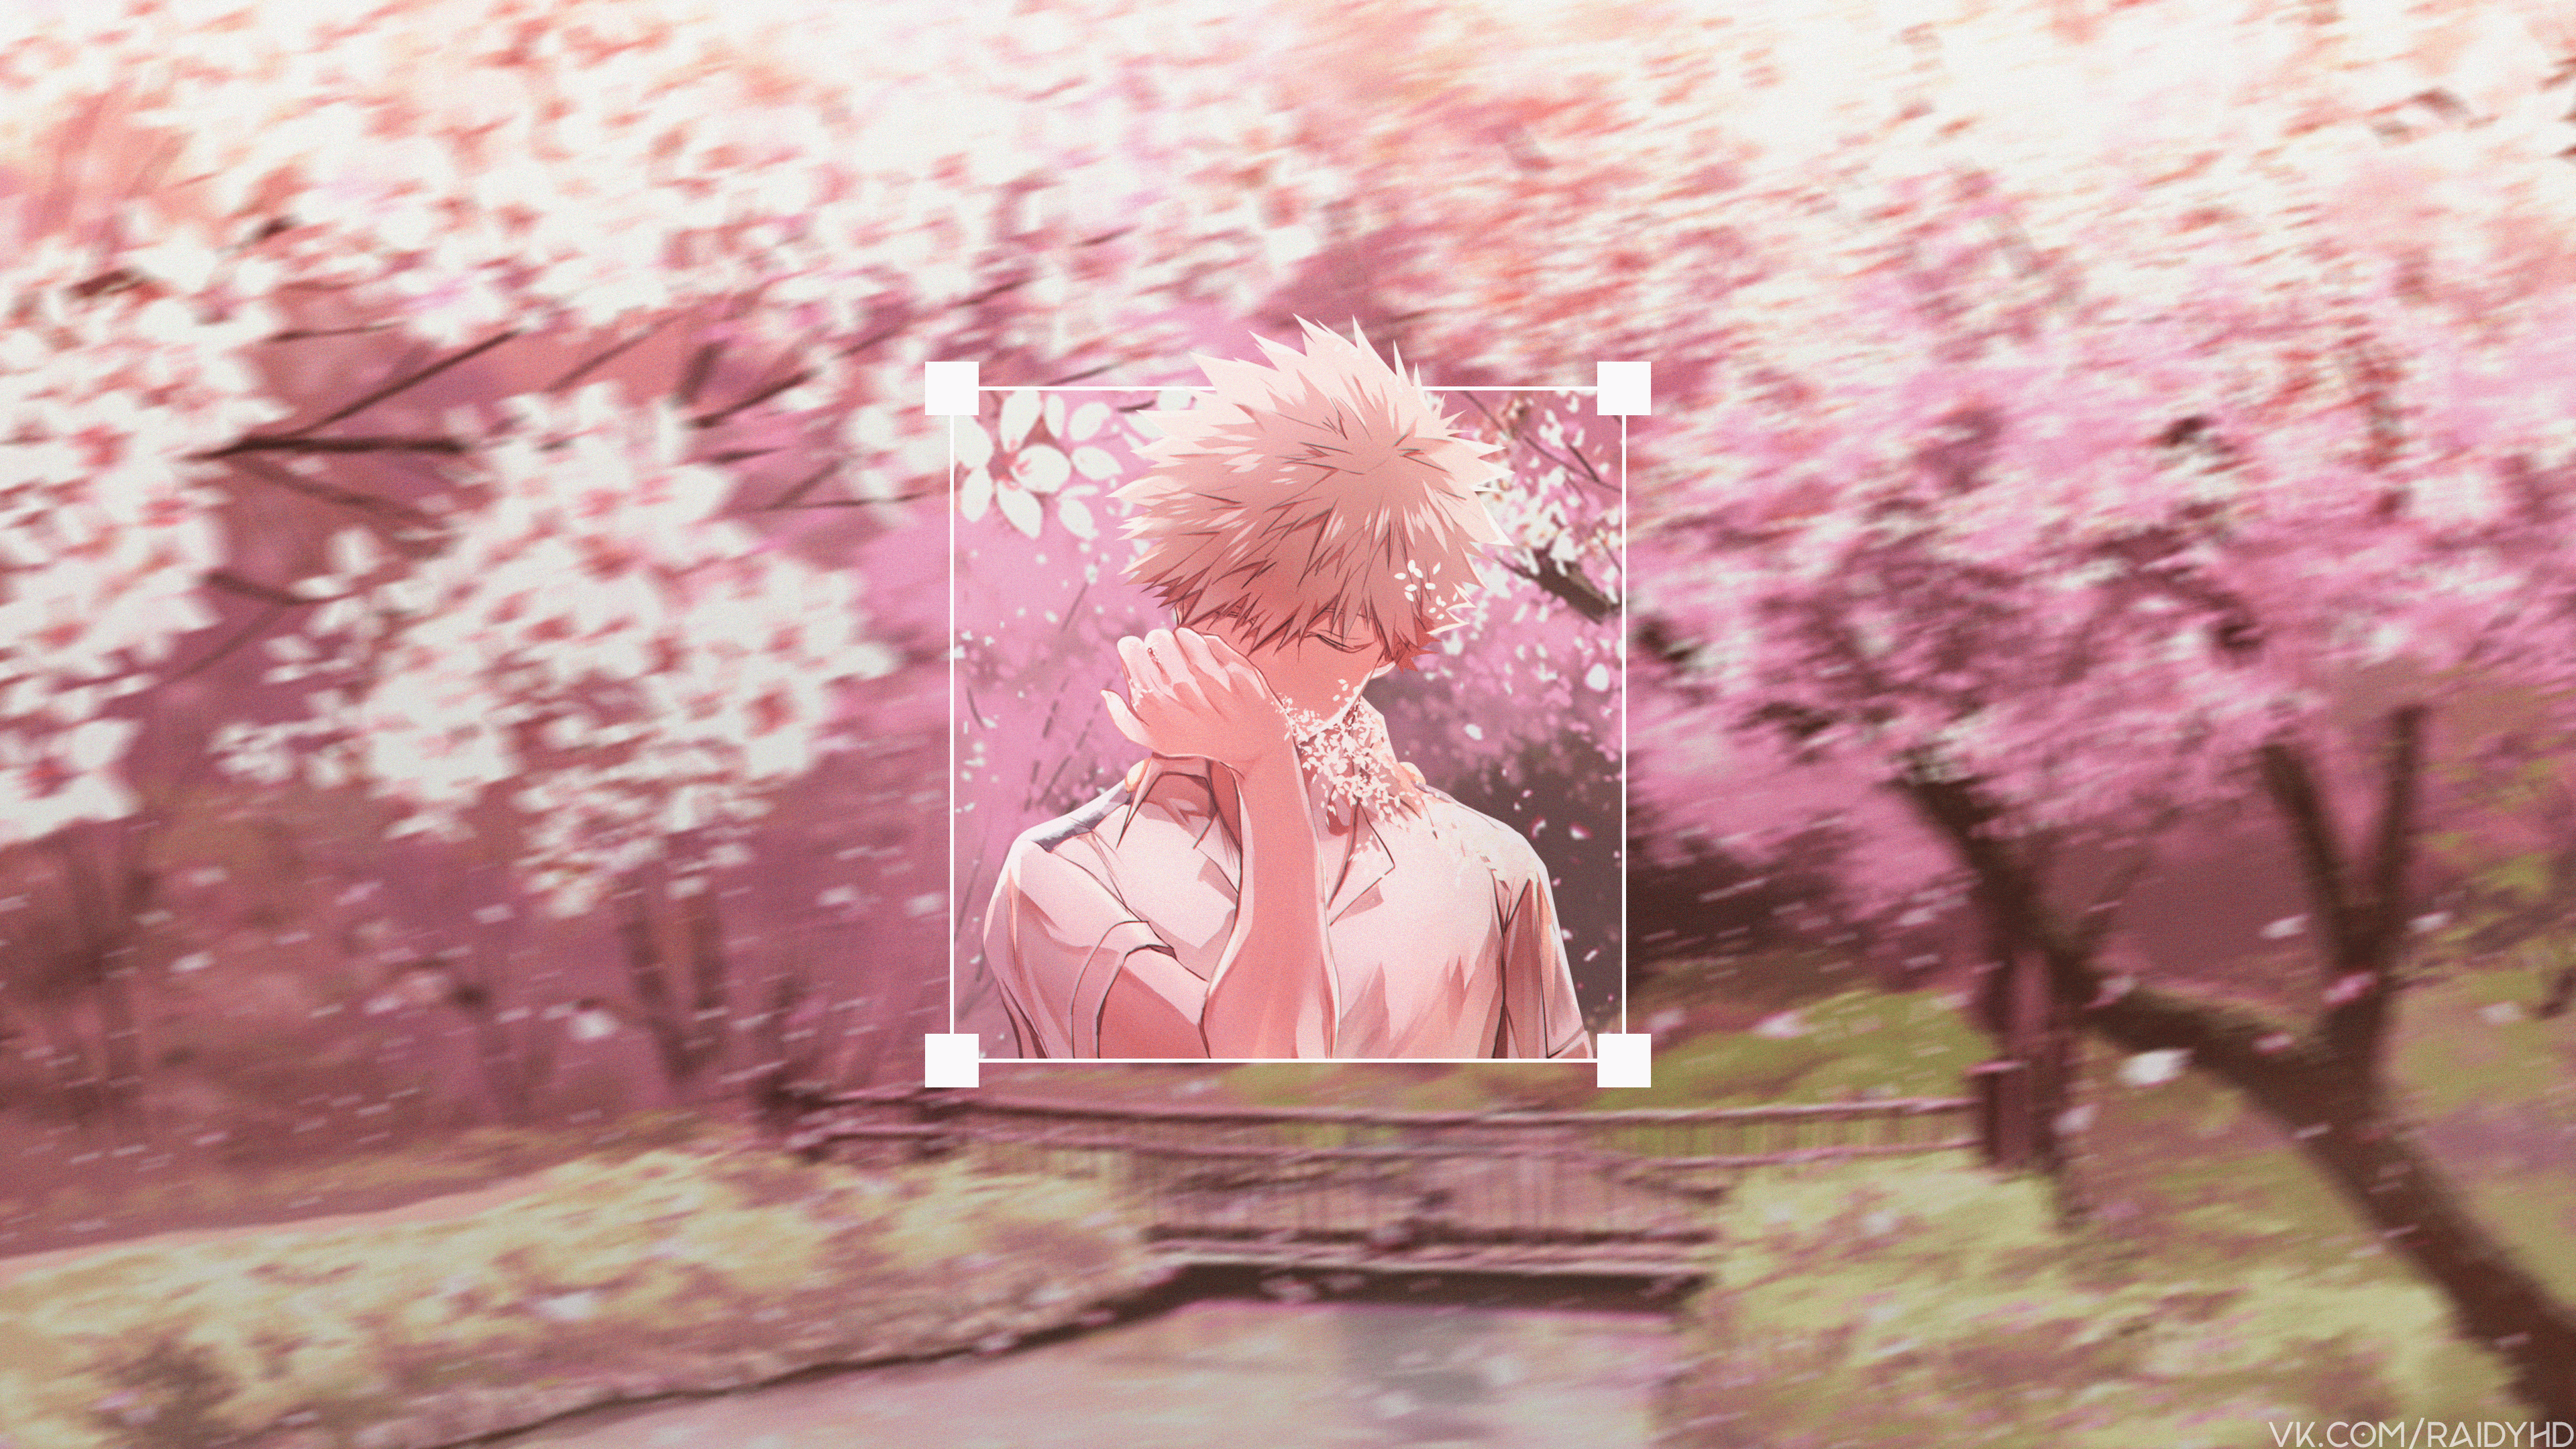 Anime 3840x2160 anime boys anime picture-in-picture Boku no Hero Academia trees plants cherry blossom Katsuki Bakugou closed eyes